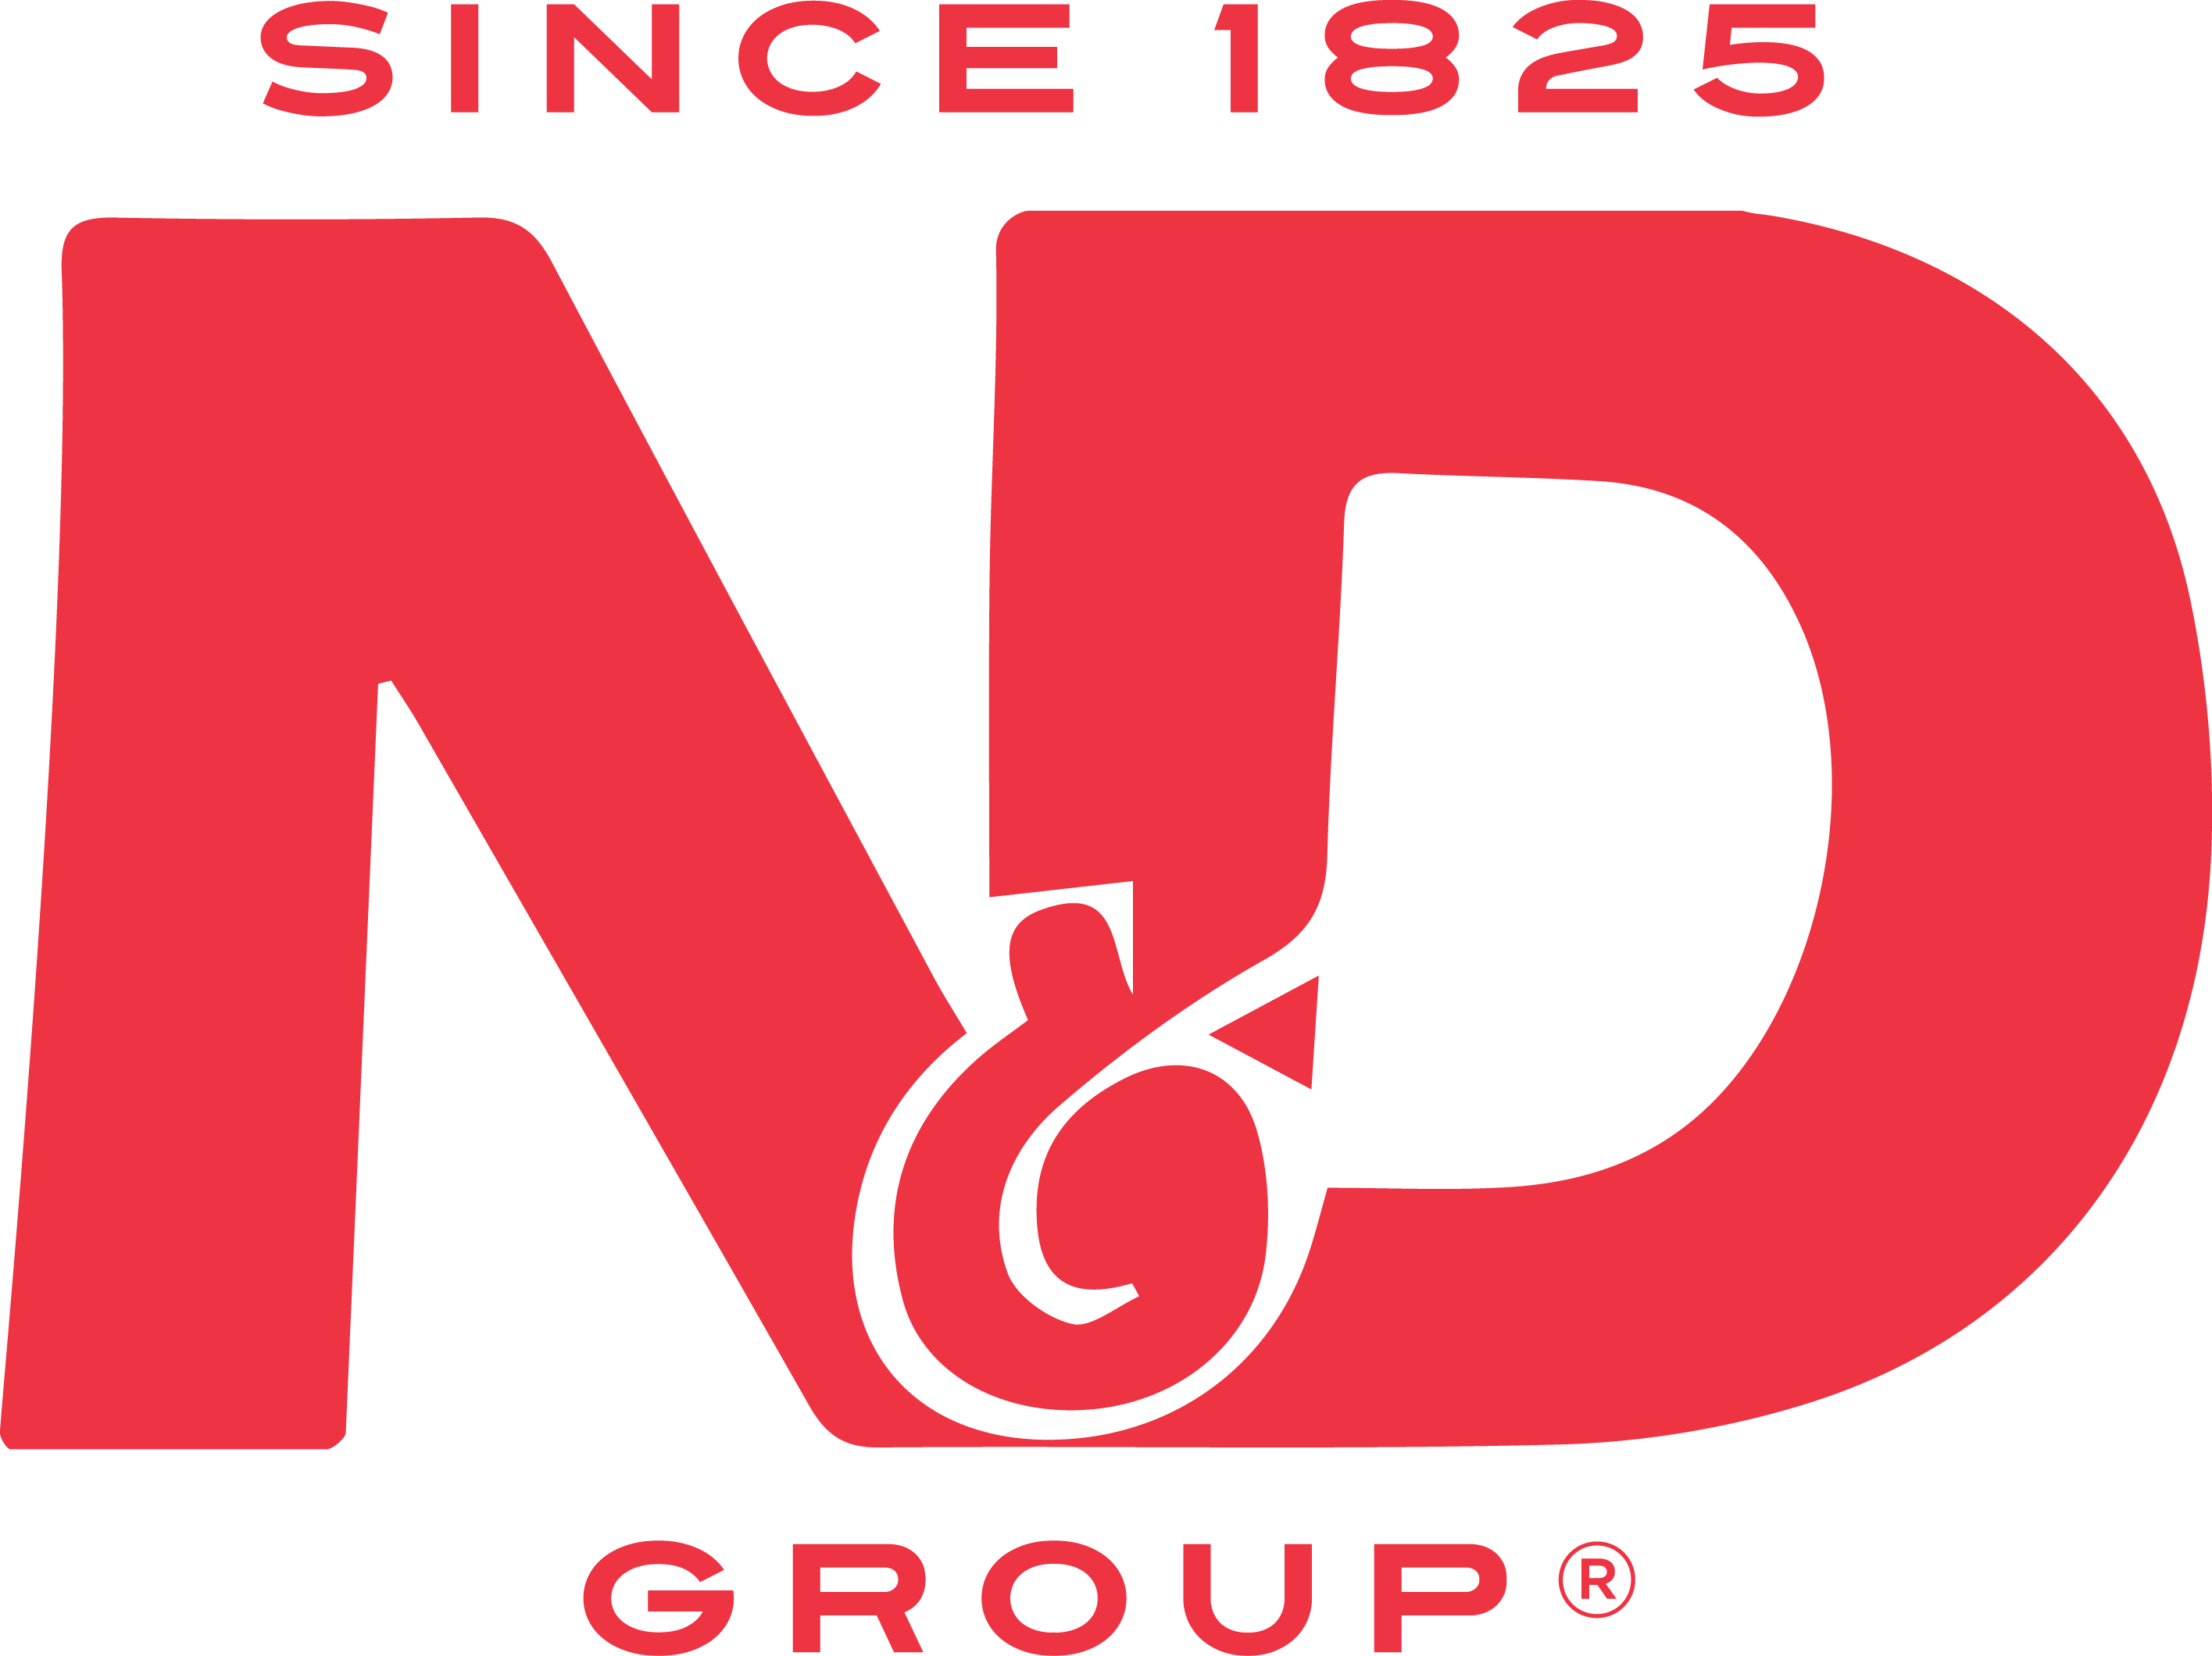 ND Group 2015 Pantone Red 032 C